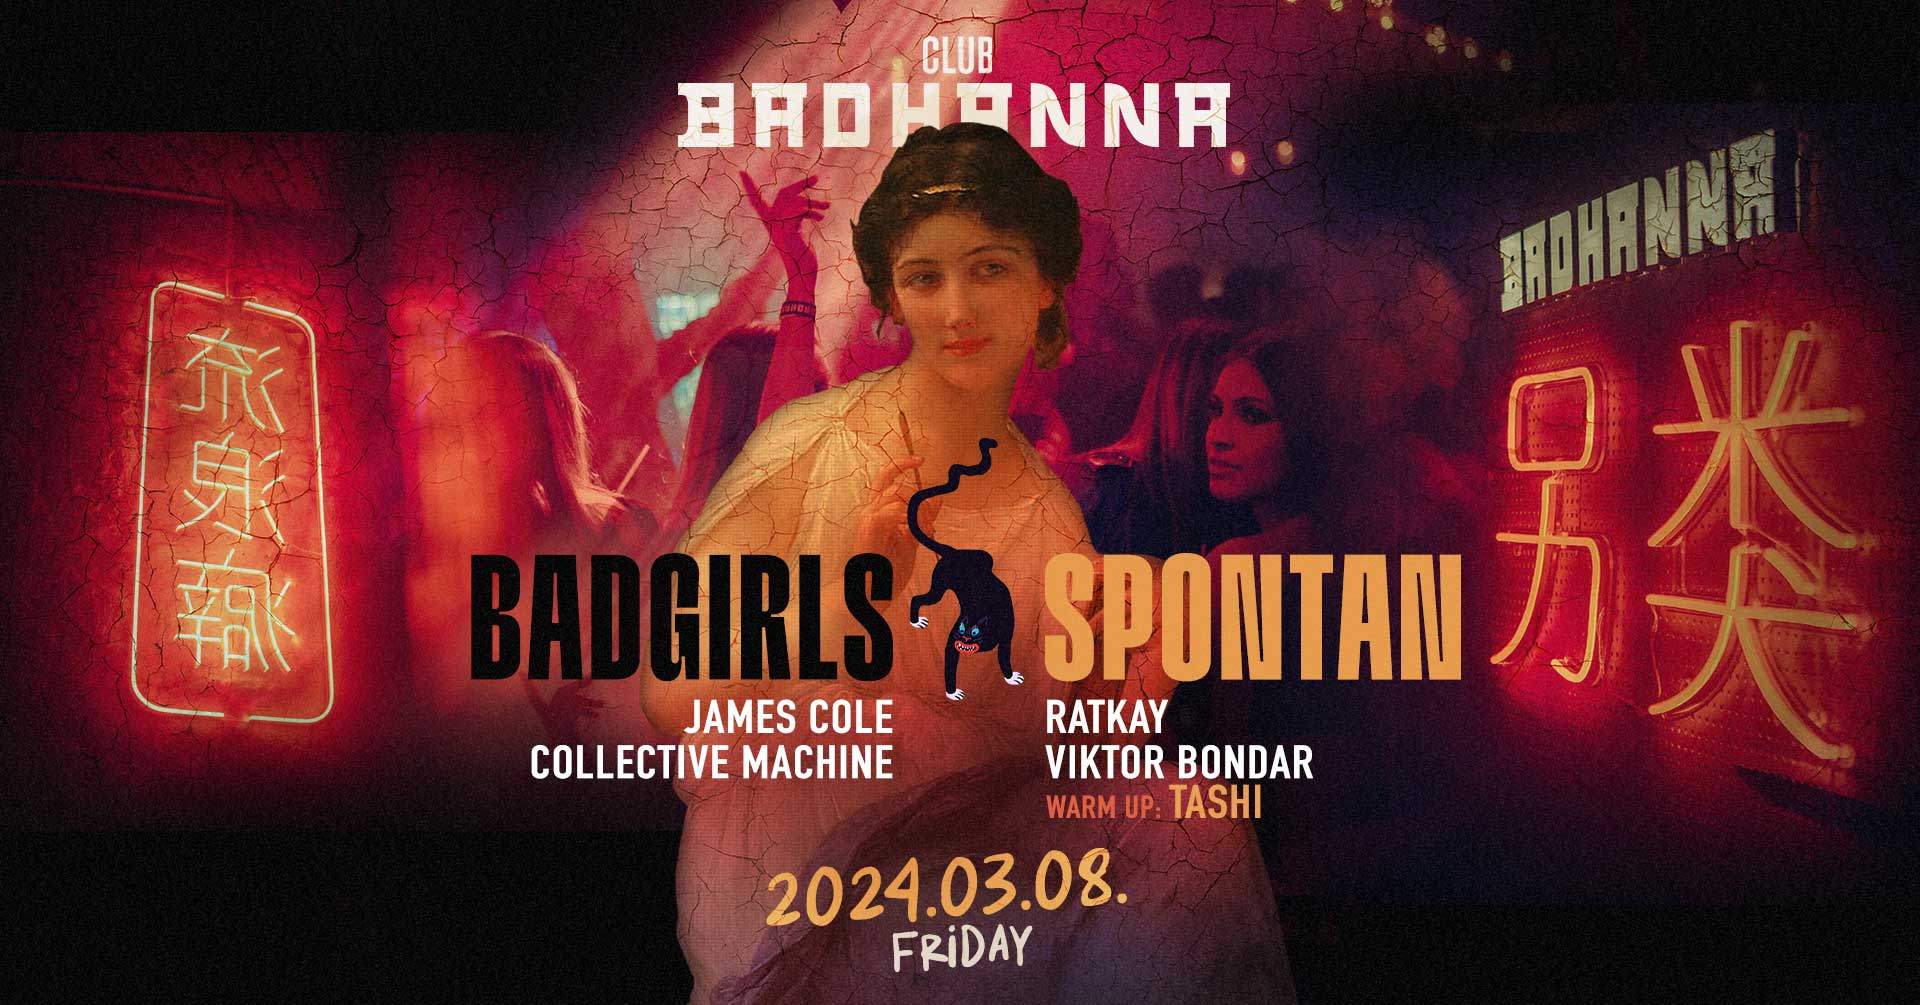 Badgirls vs SPONTAN Club BADHANNA Women's day Edition - Página frontal